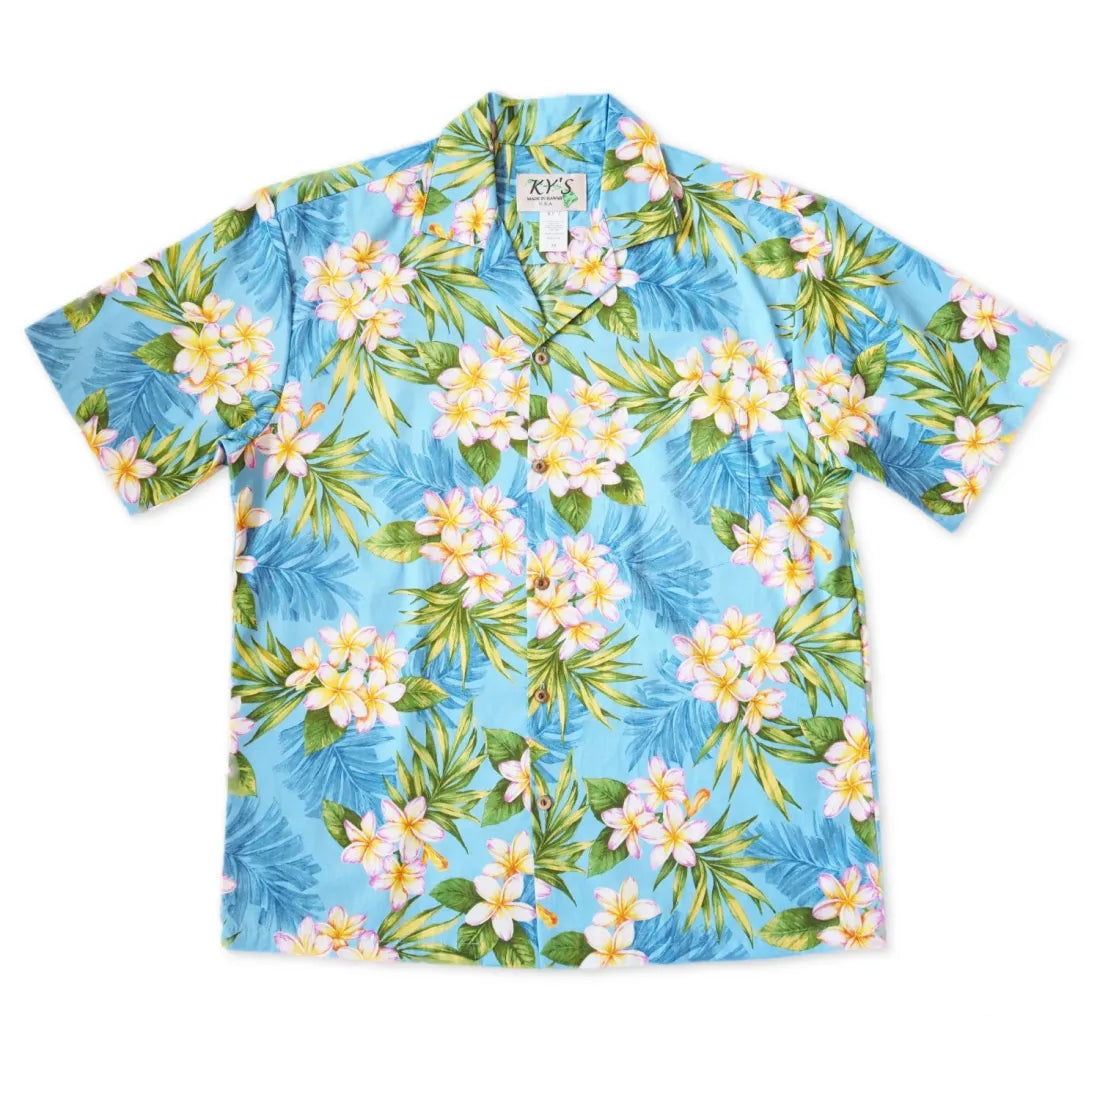 Gardens Blue Hawaiian Cotton Shirt - Made In Hawaii